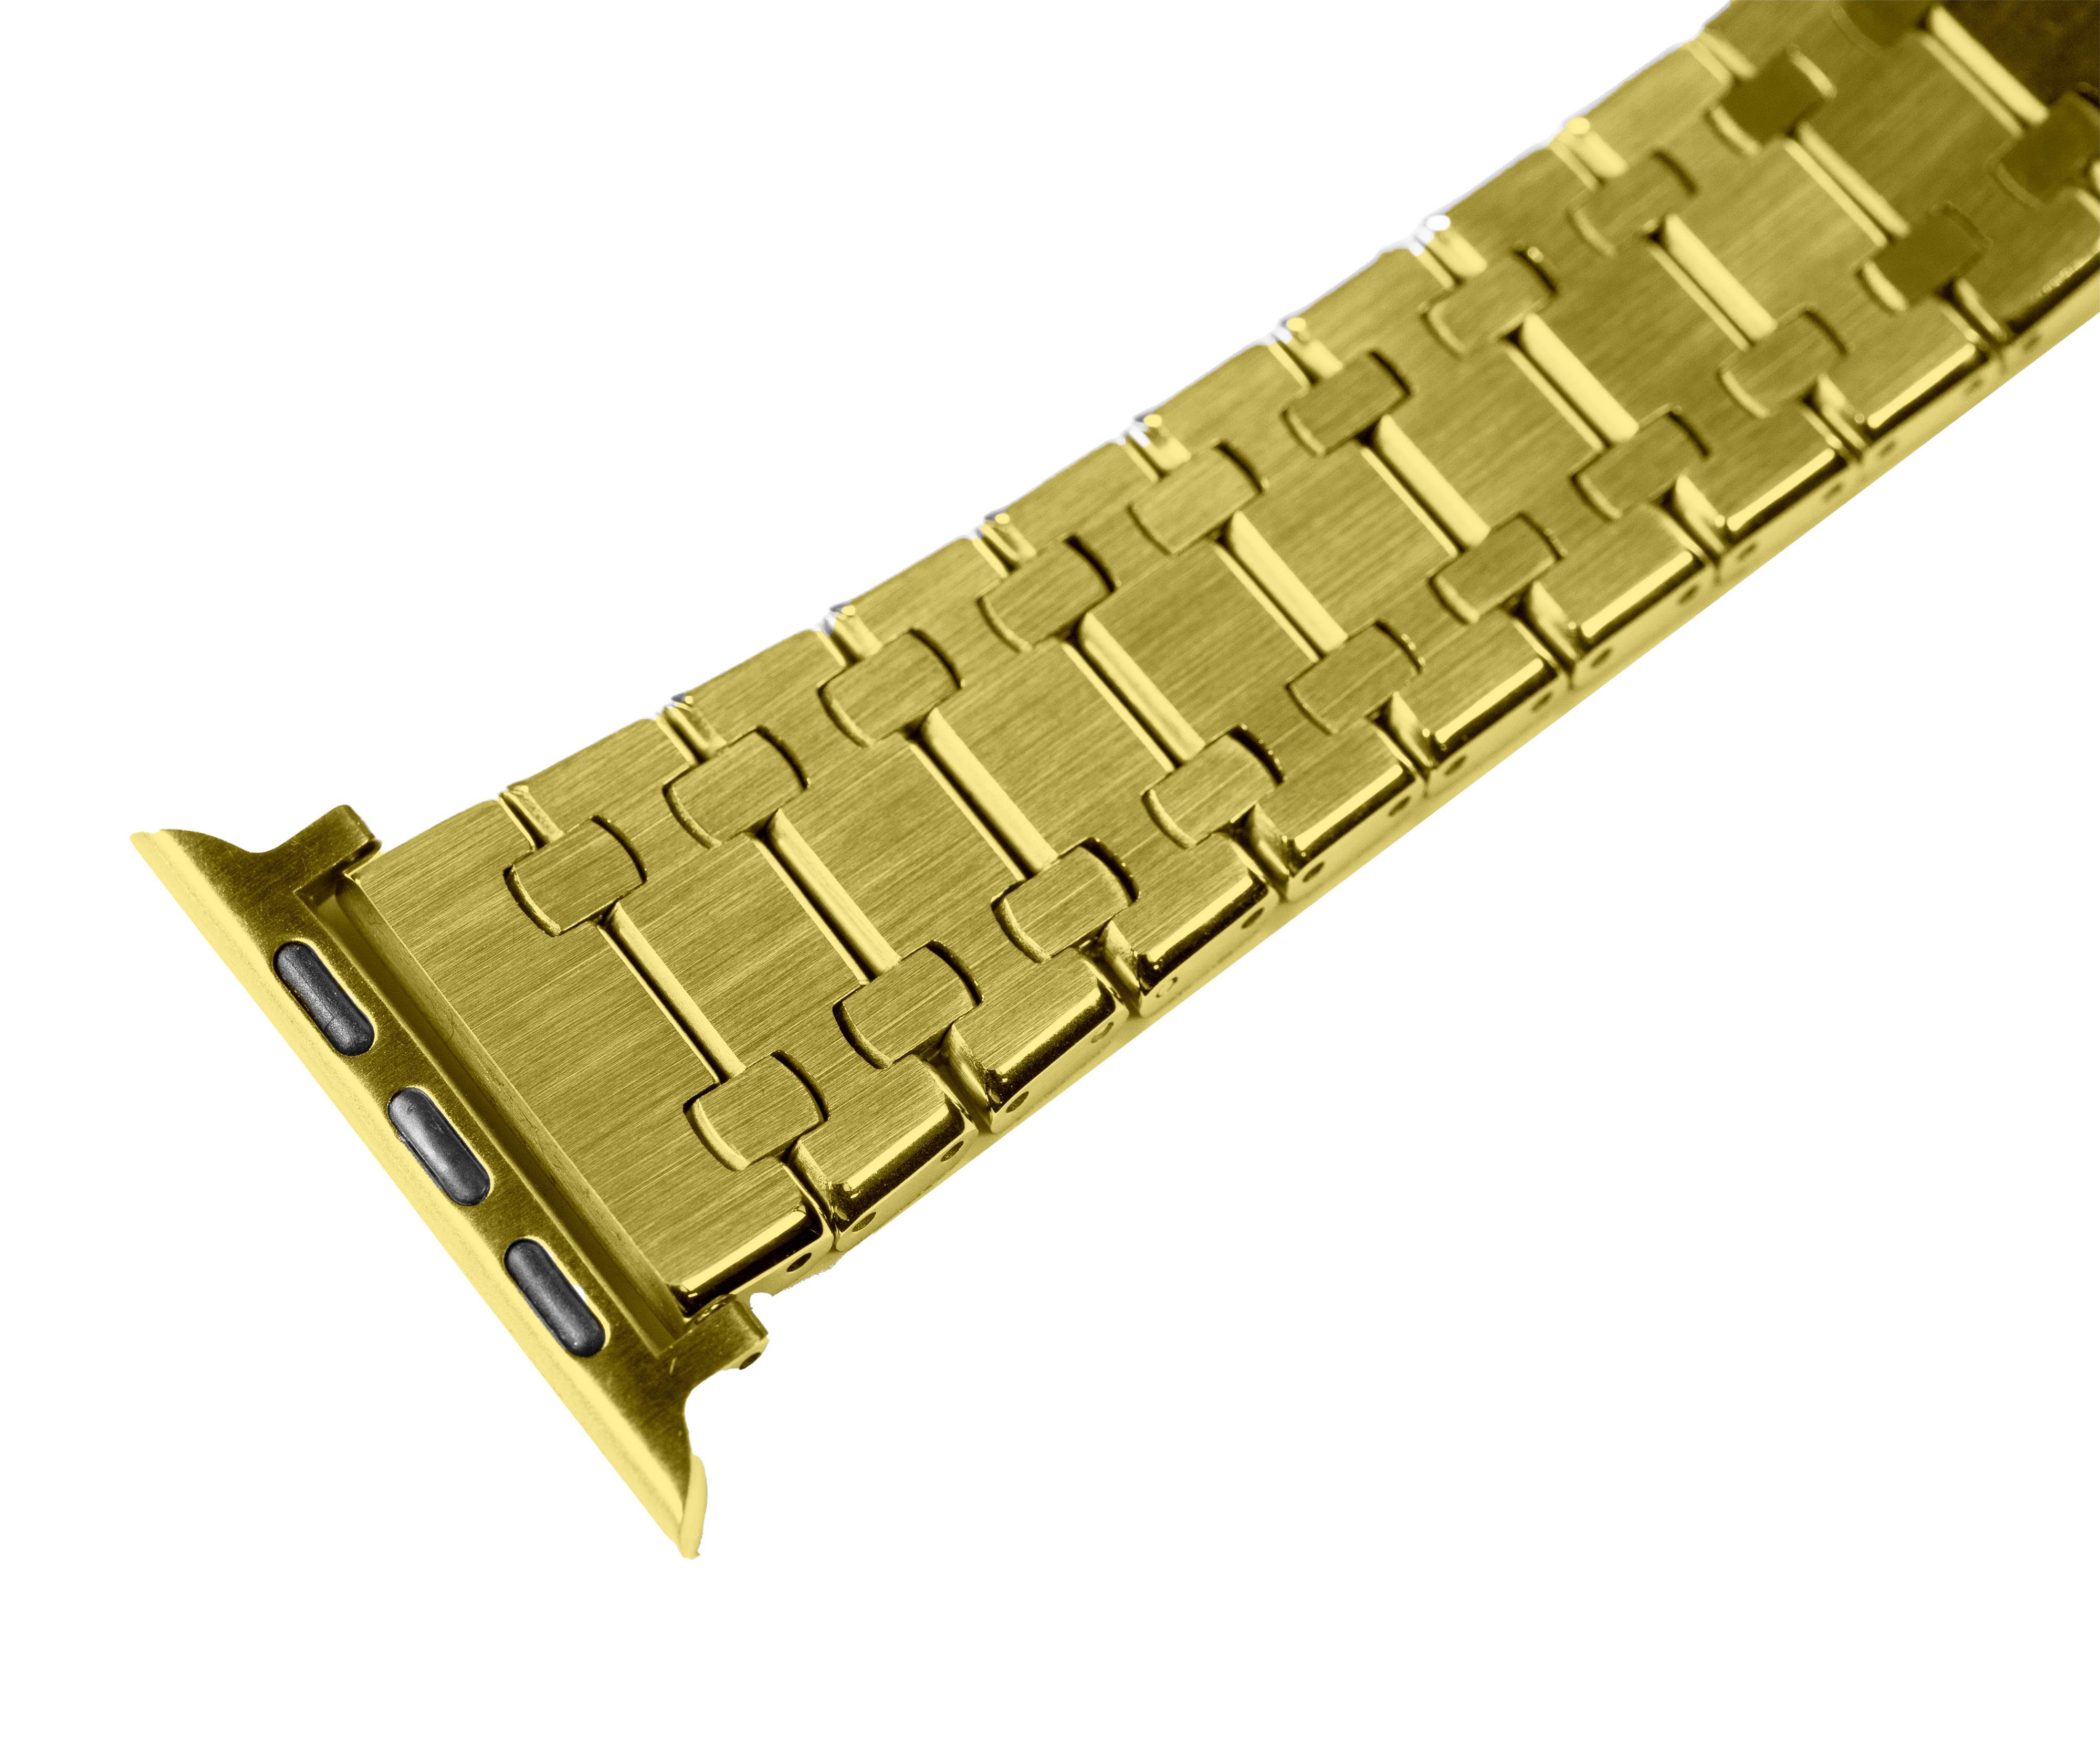 [Apple Watch] Medallion Bracelet - Gold